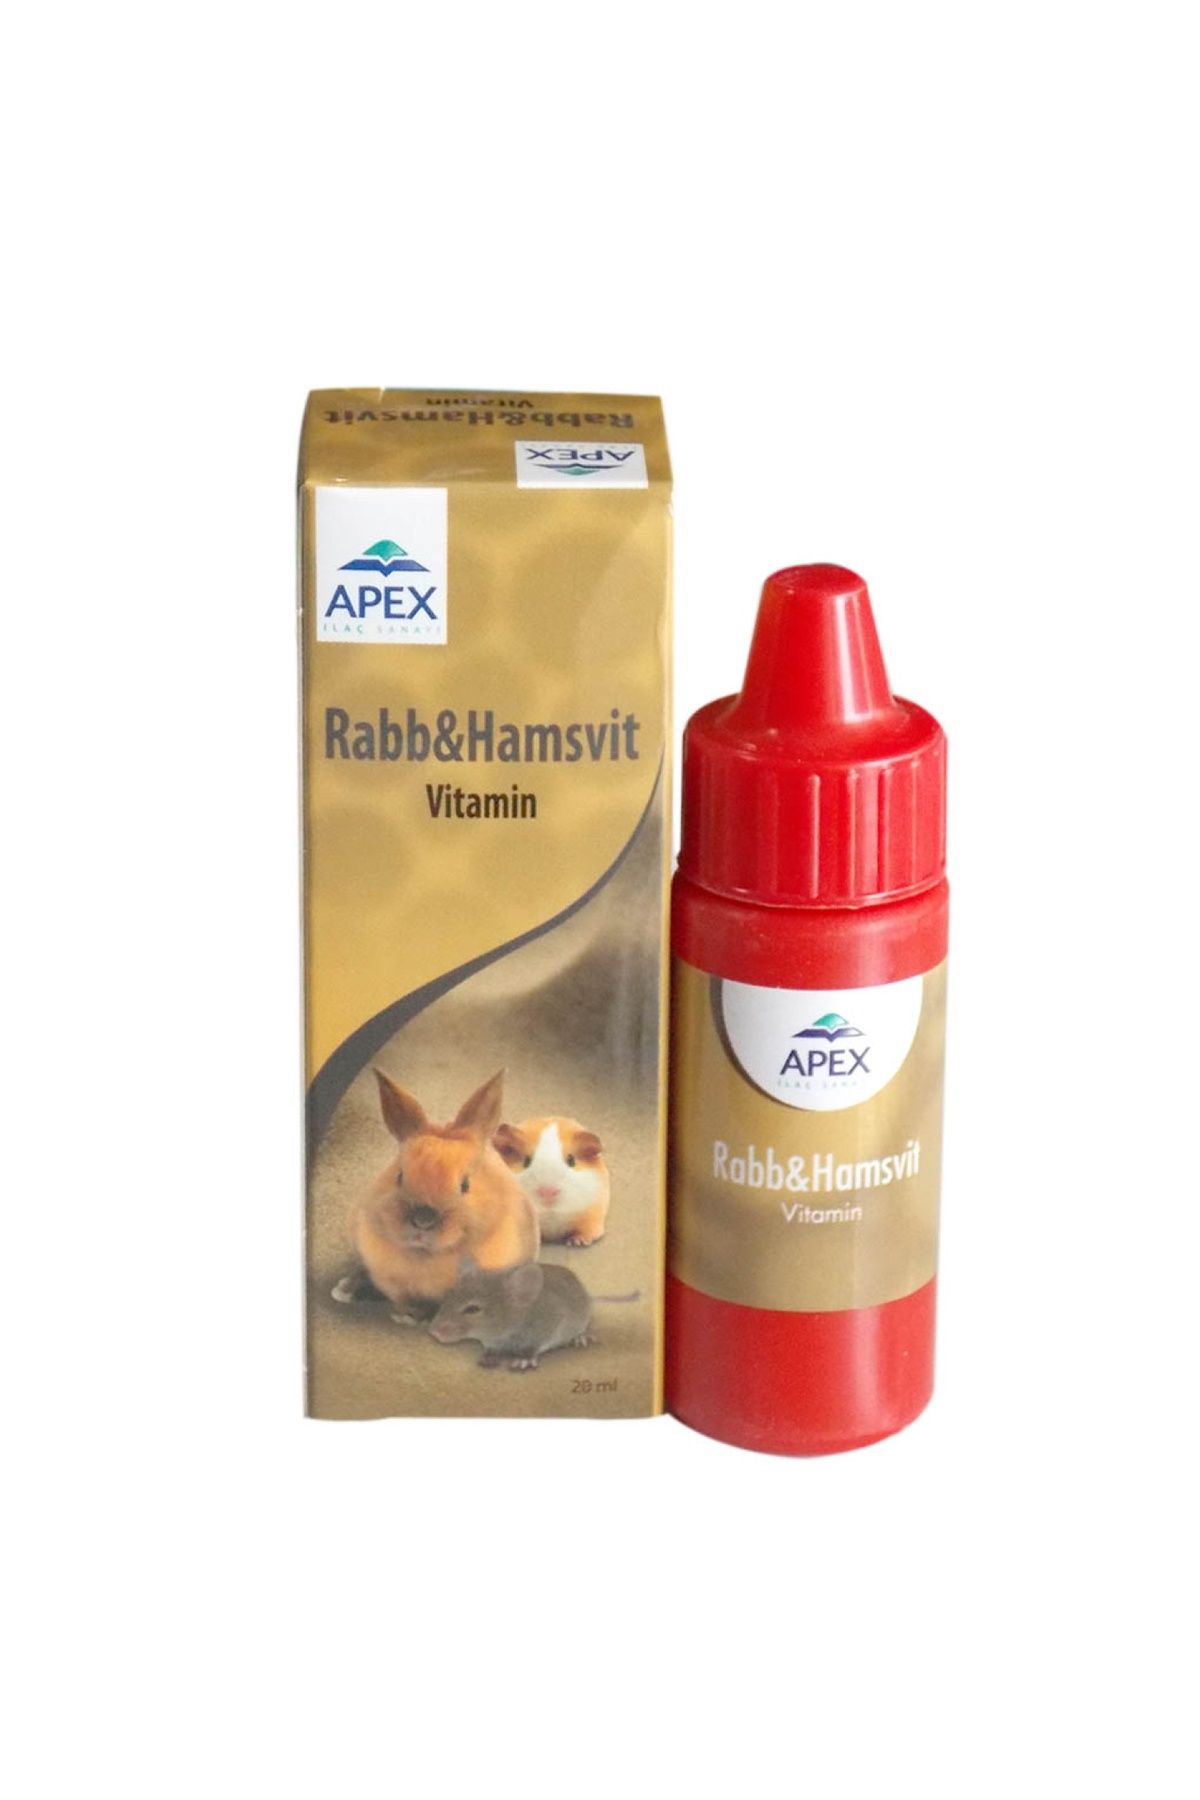 MAGİTOPTAN Hamster Vitamini Rabb-Hamsvit - Apex